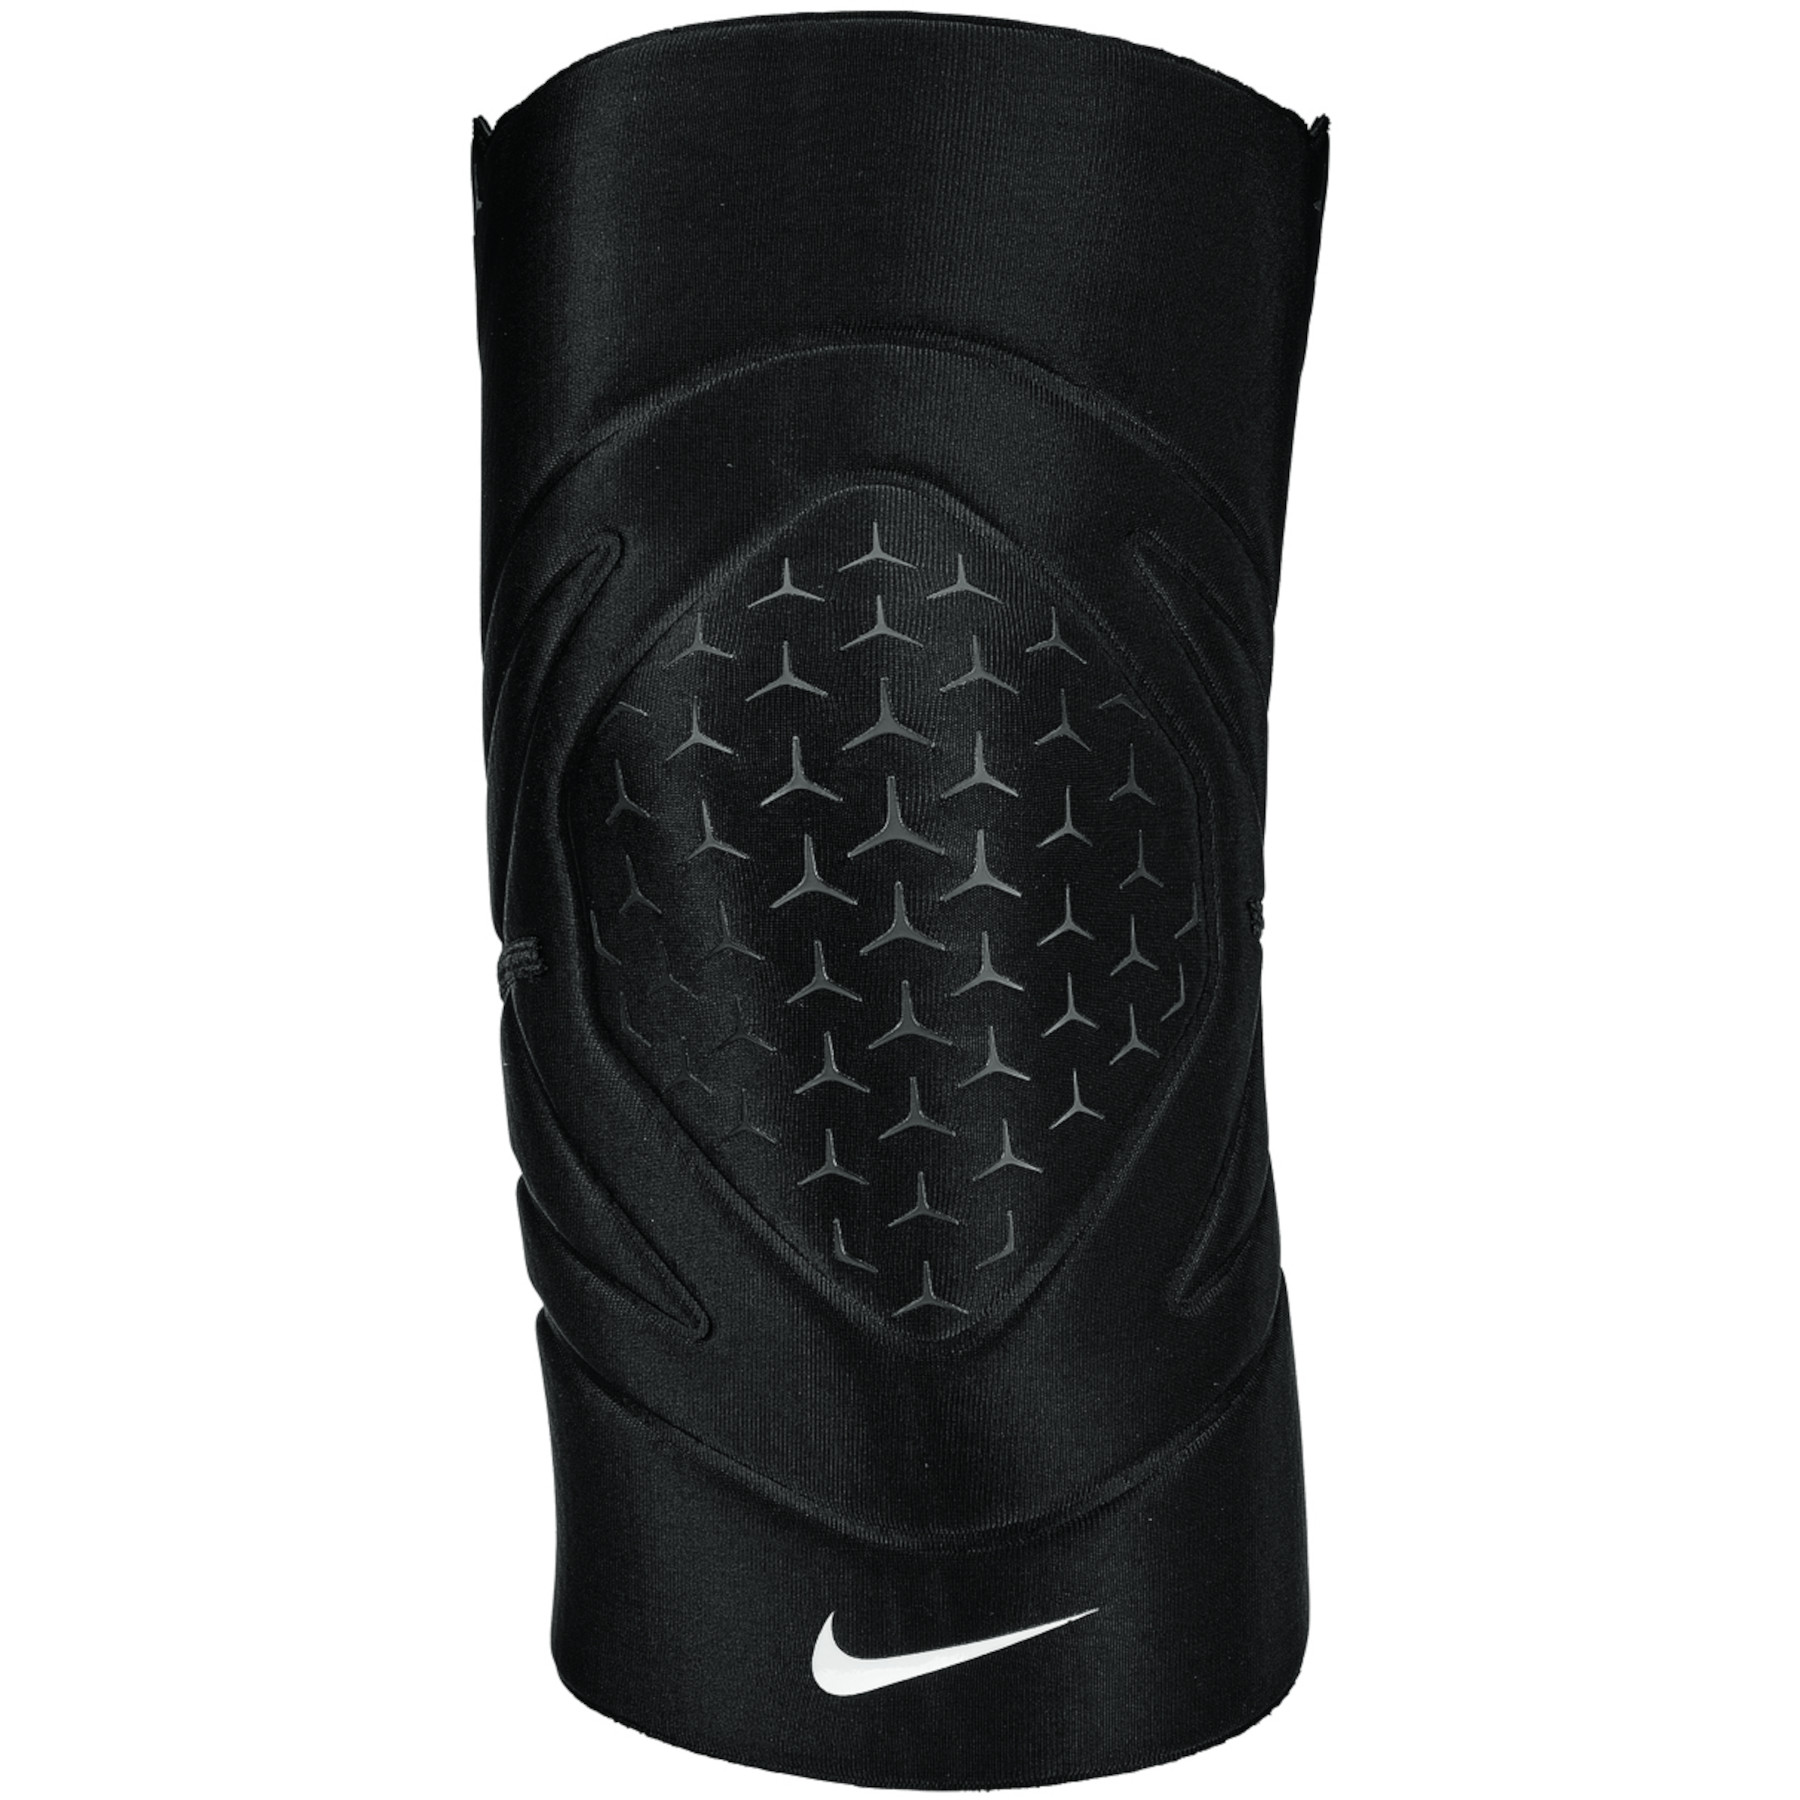 Produktbild von Nike Pro Closed Patella 3.0 Knie Bandage - black/white 010